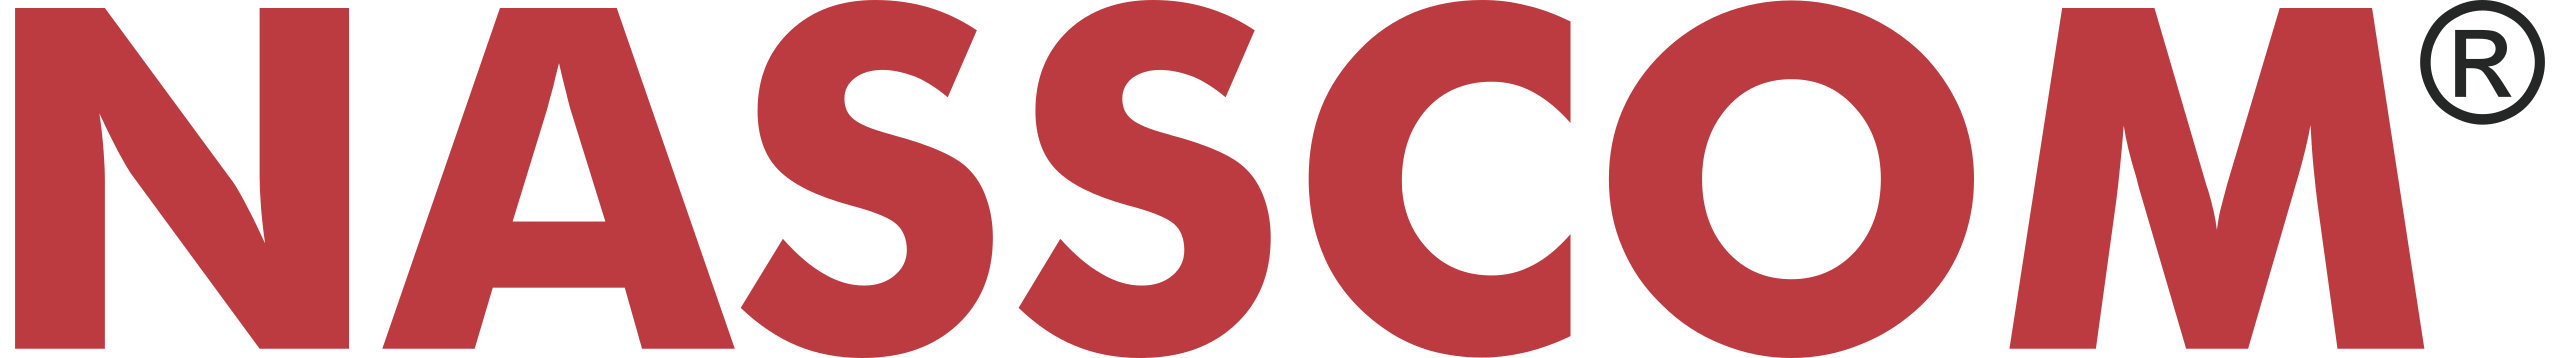 Nasscom Certification Logo